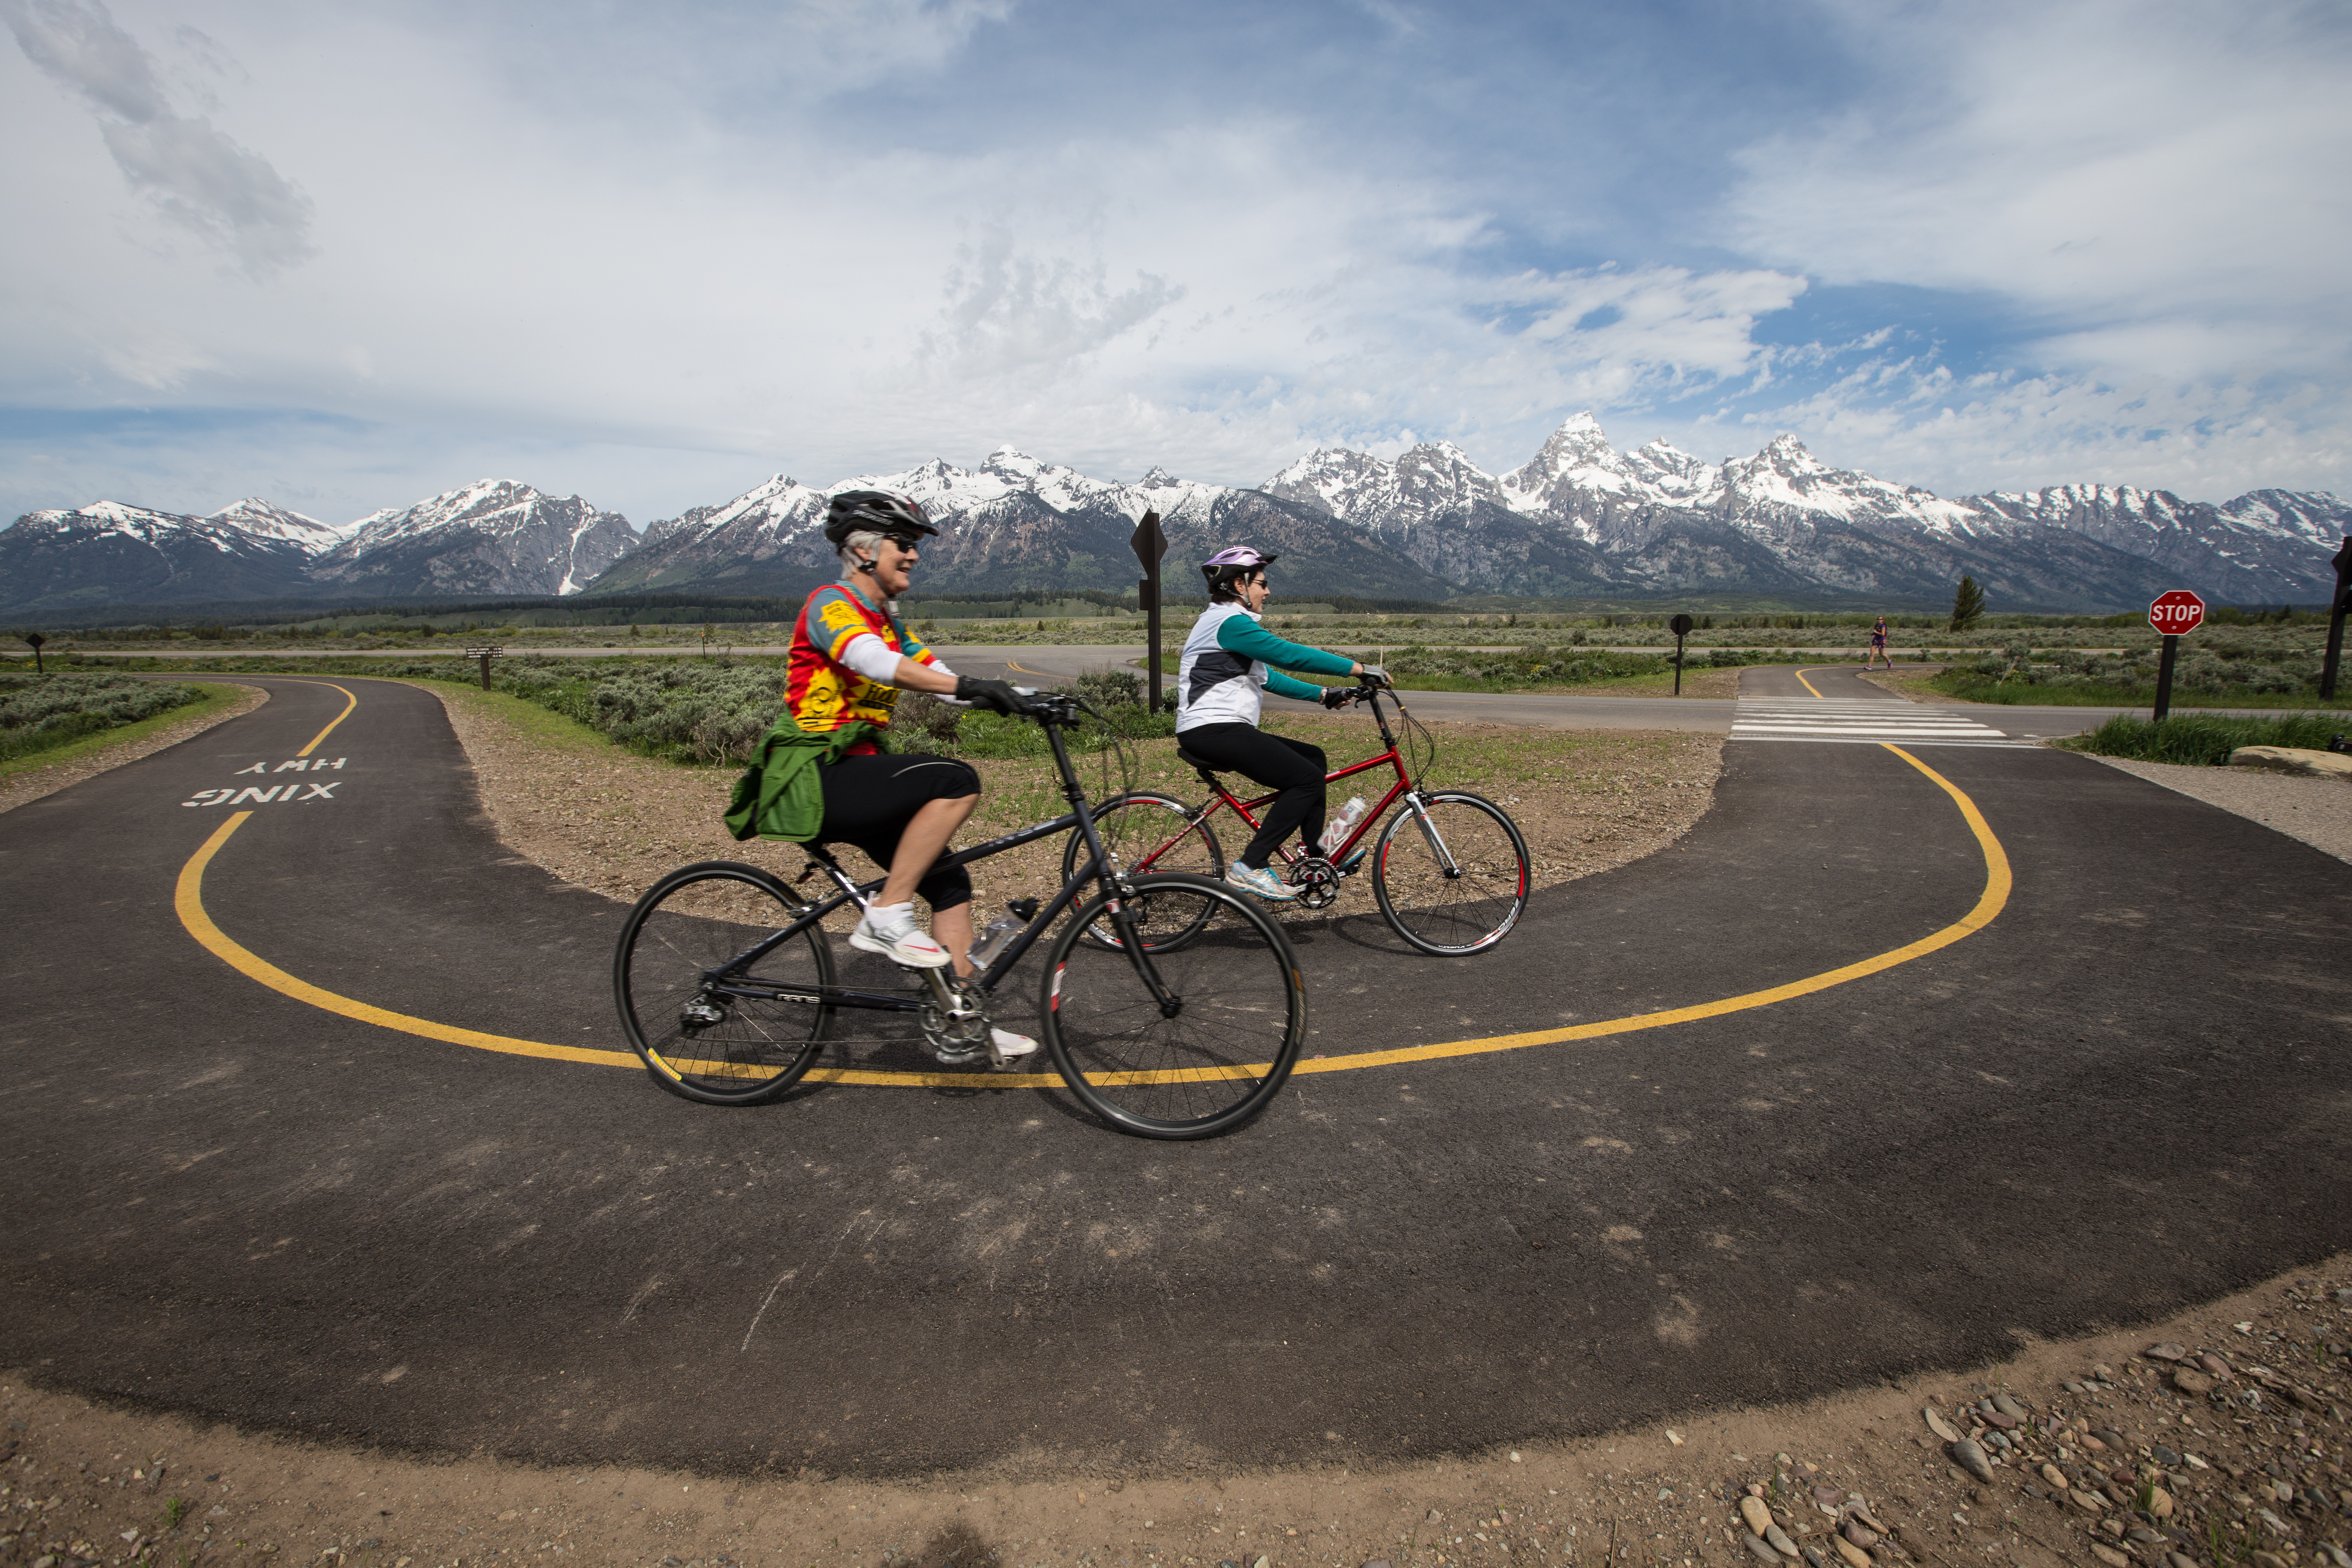 Biking in the Park - Grand Teton National Park (U.S. National Park Service)